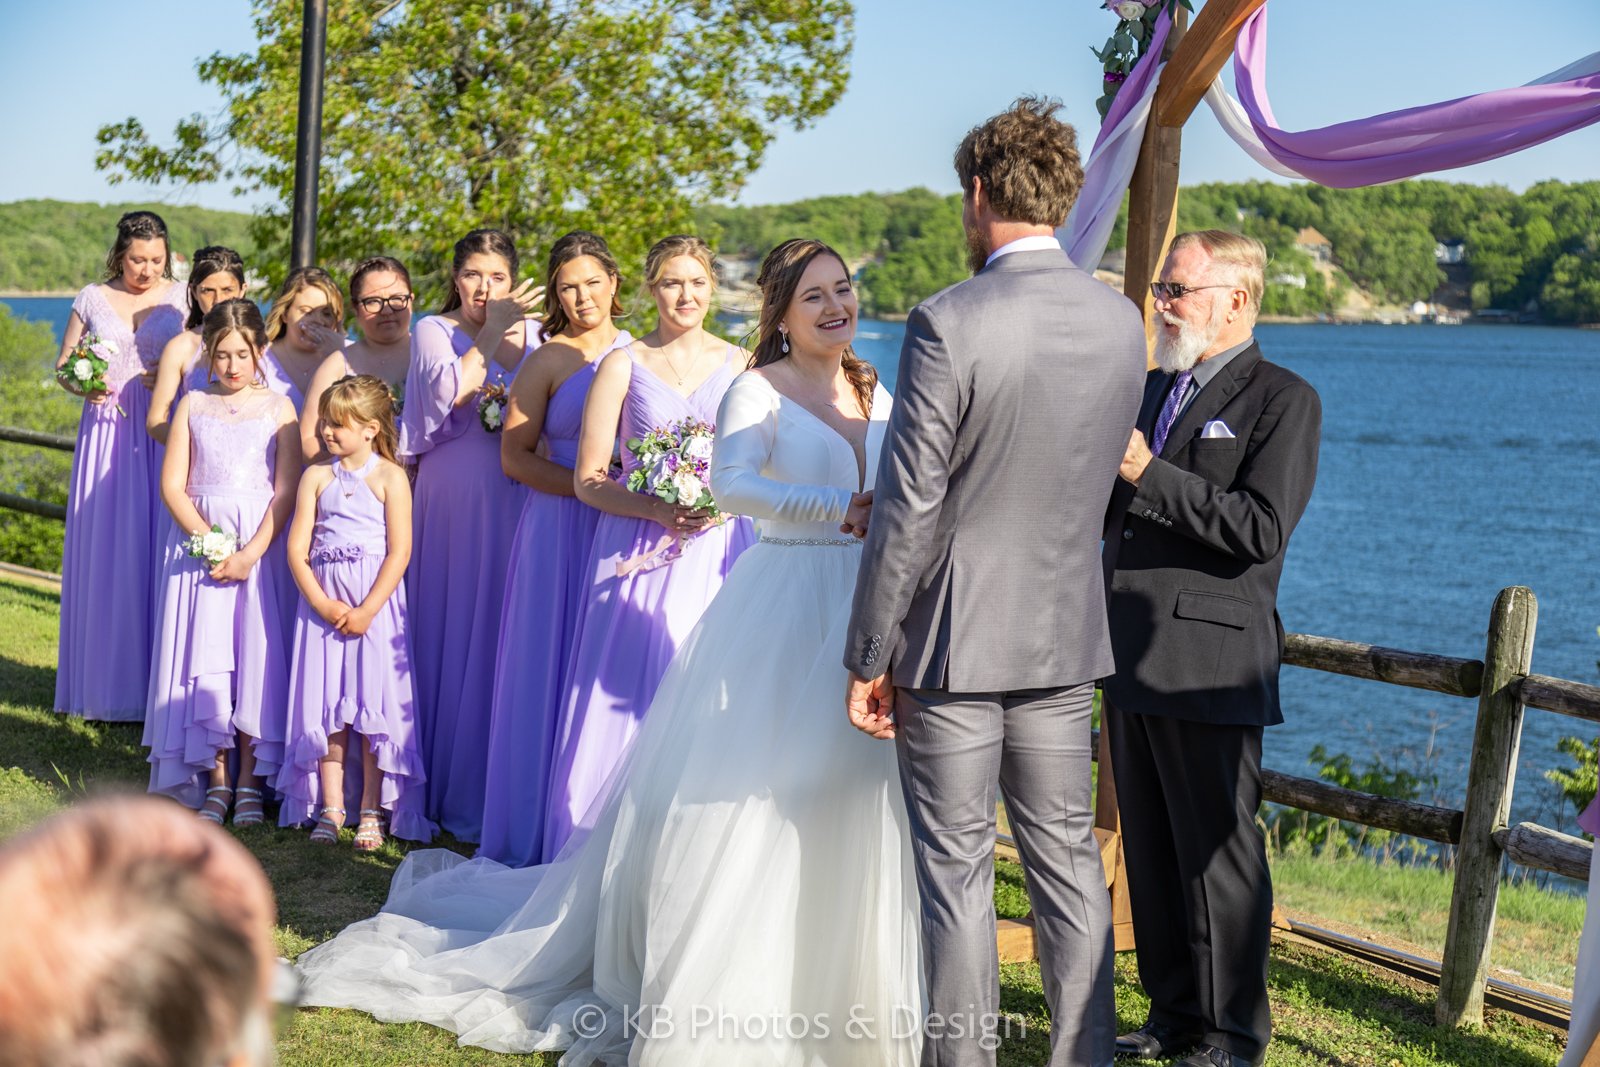 Wedding-Lanna-Brad-Lodge-of-Four-Seasons-St-Louis-STL-Lake-of-the-Ozarks-Missouri-wedding-photographer-KB-Photos-and-Design-bride-groom-photos-444.jpg